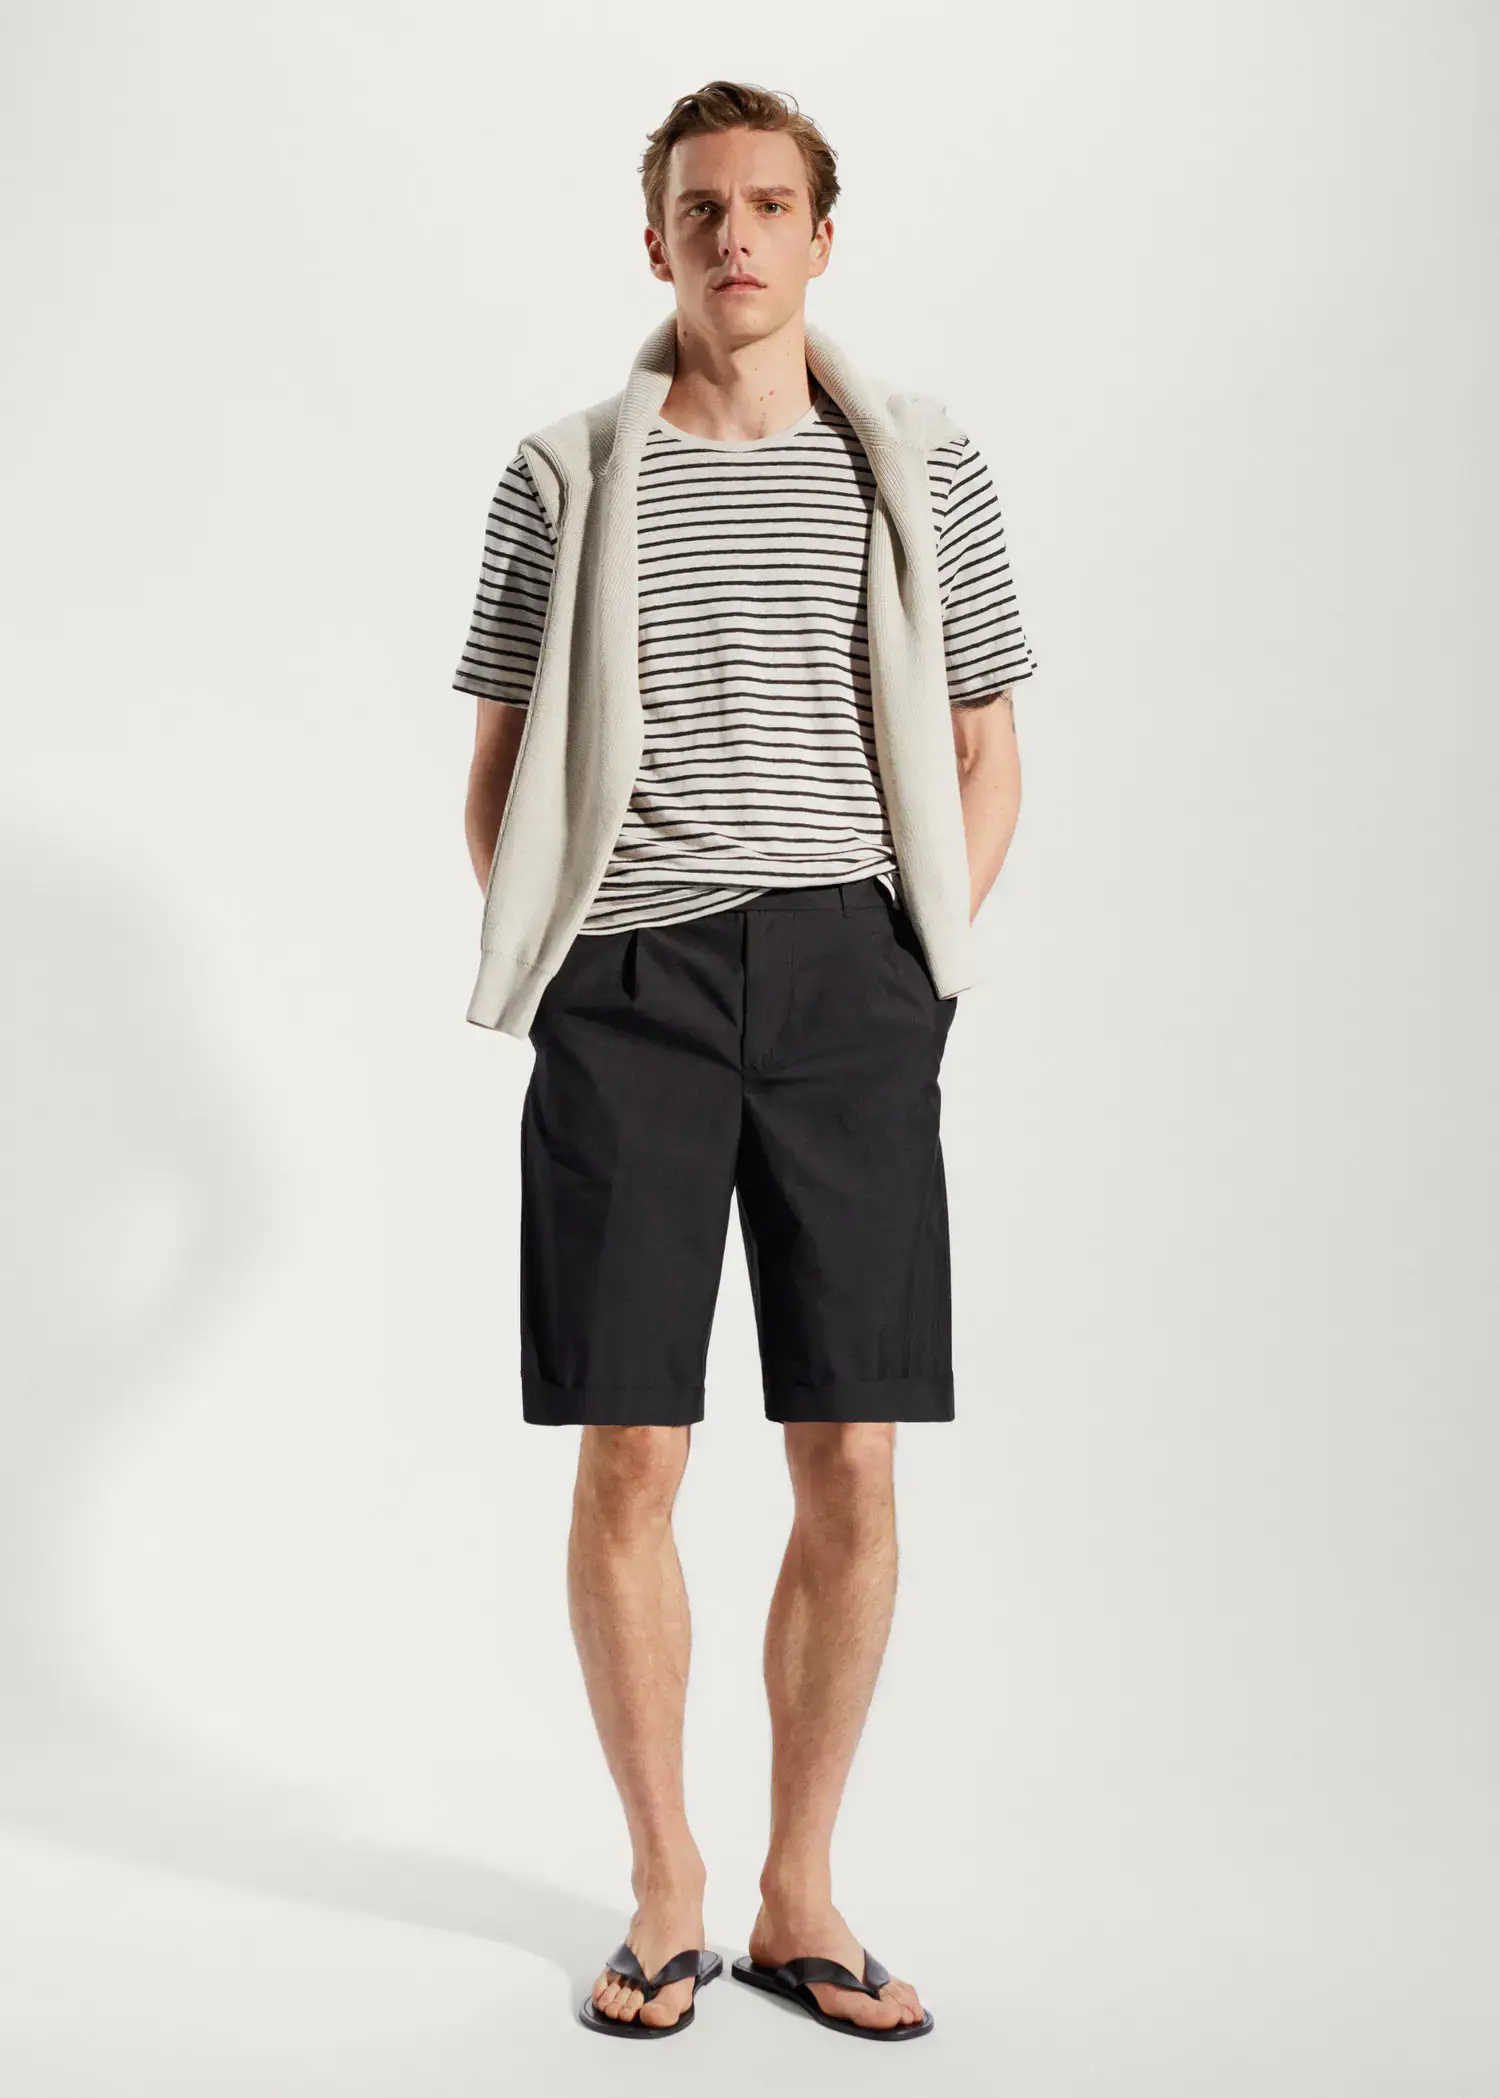 Mango 100% linen striped t-shirt. a young man wearing a striped shirt and shorts. 